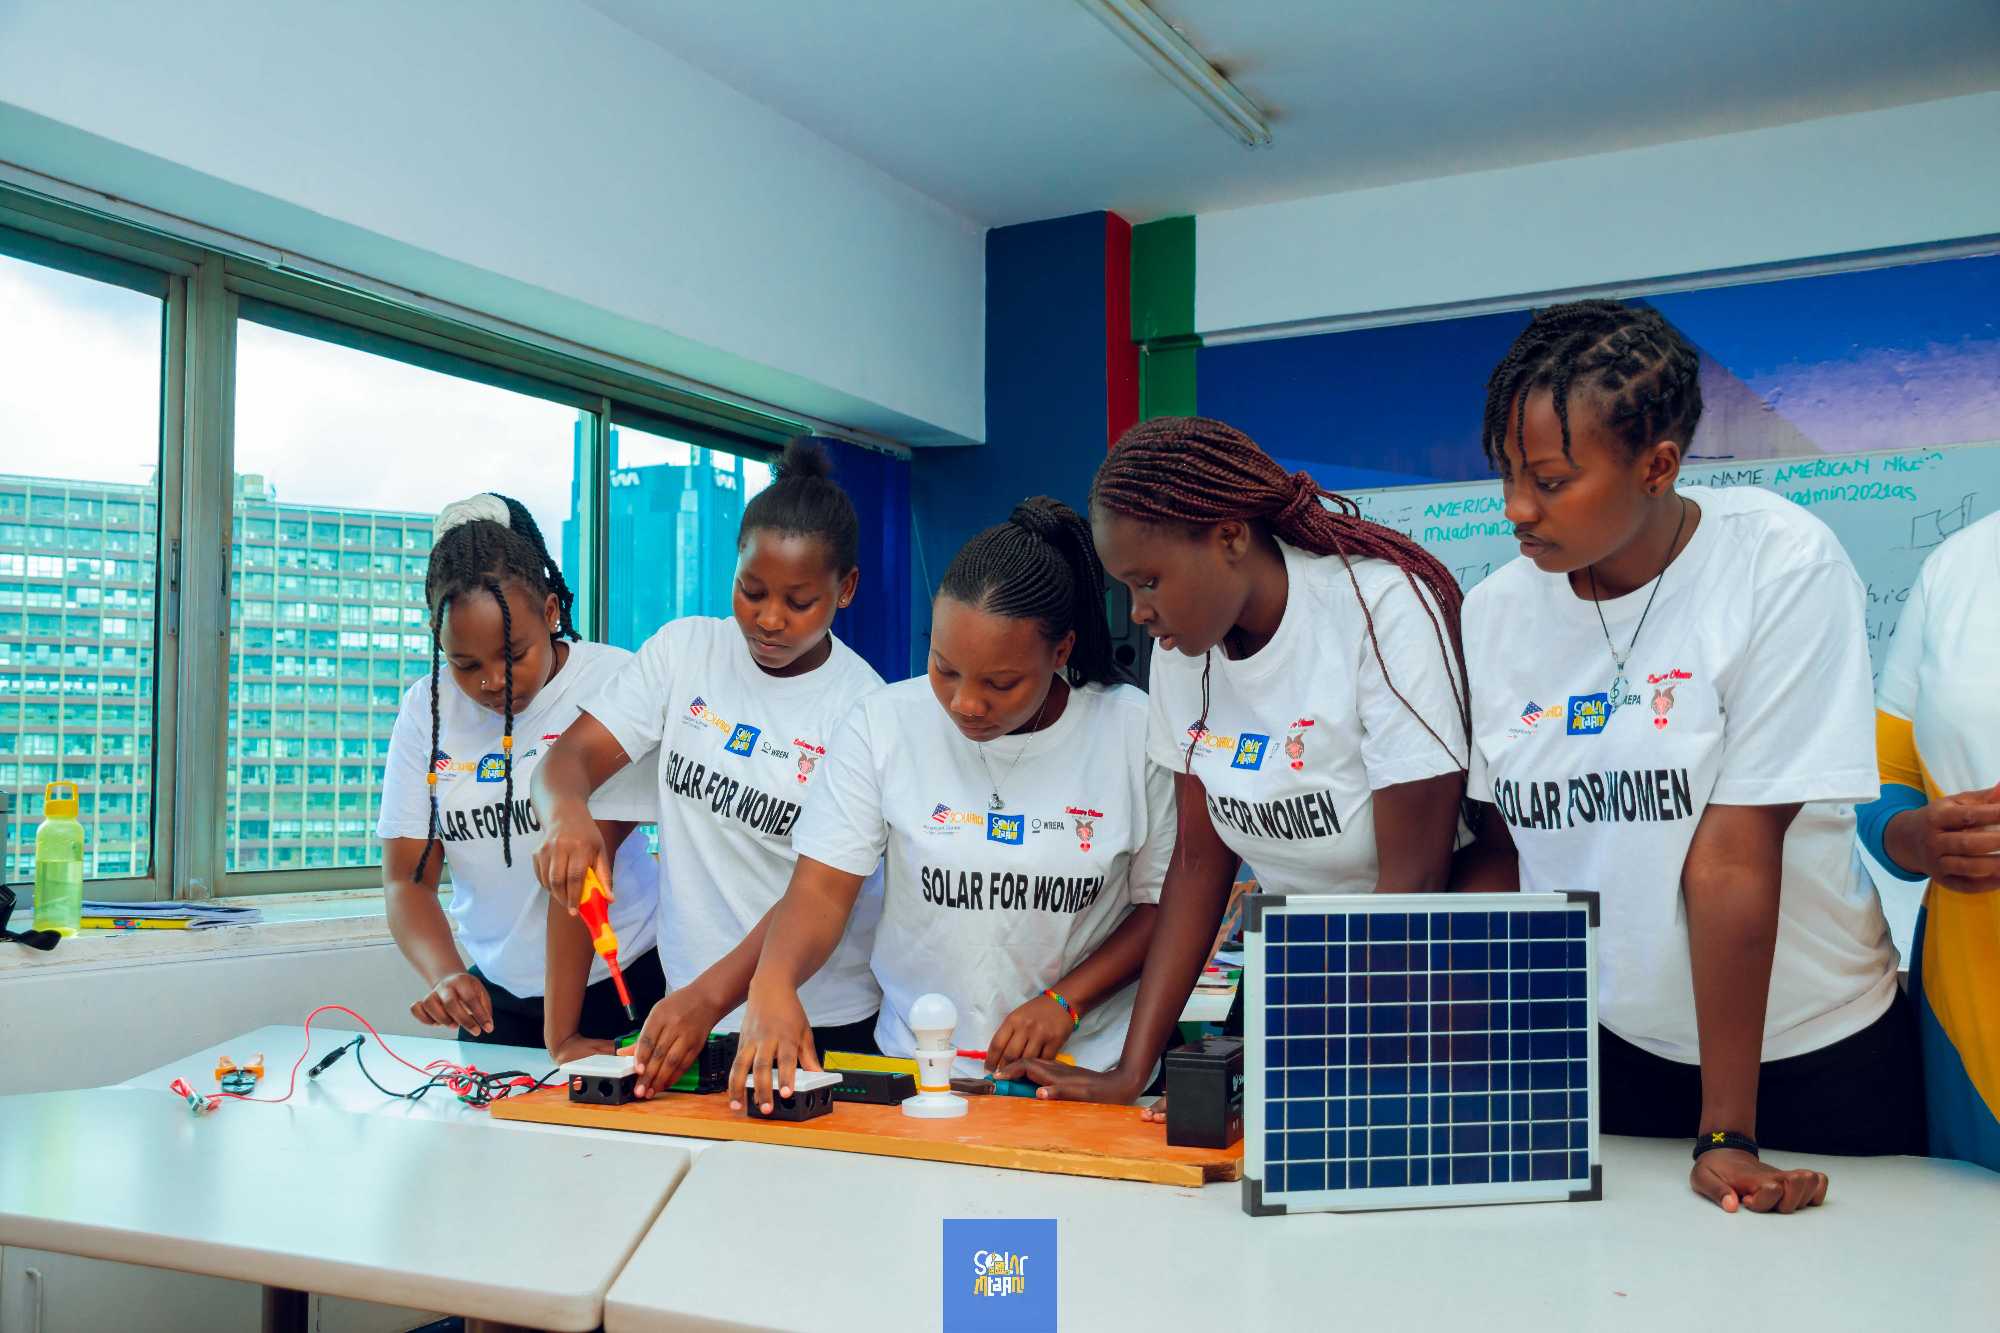 Empowering women through solar technology.